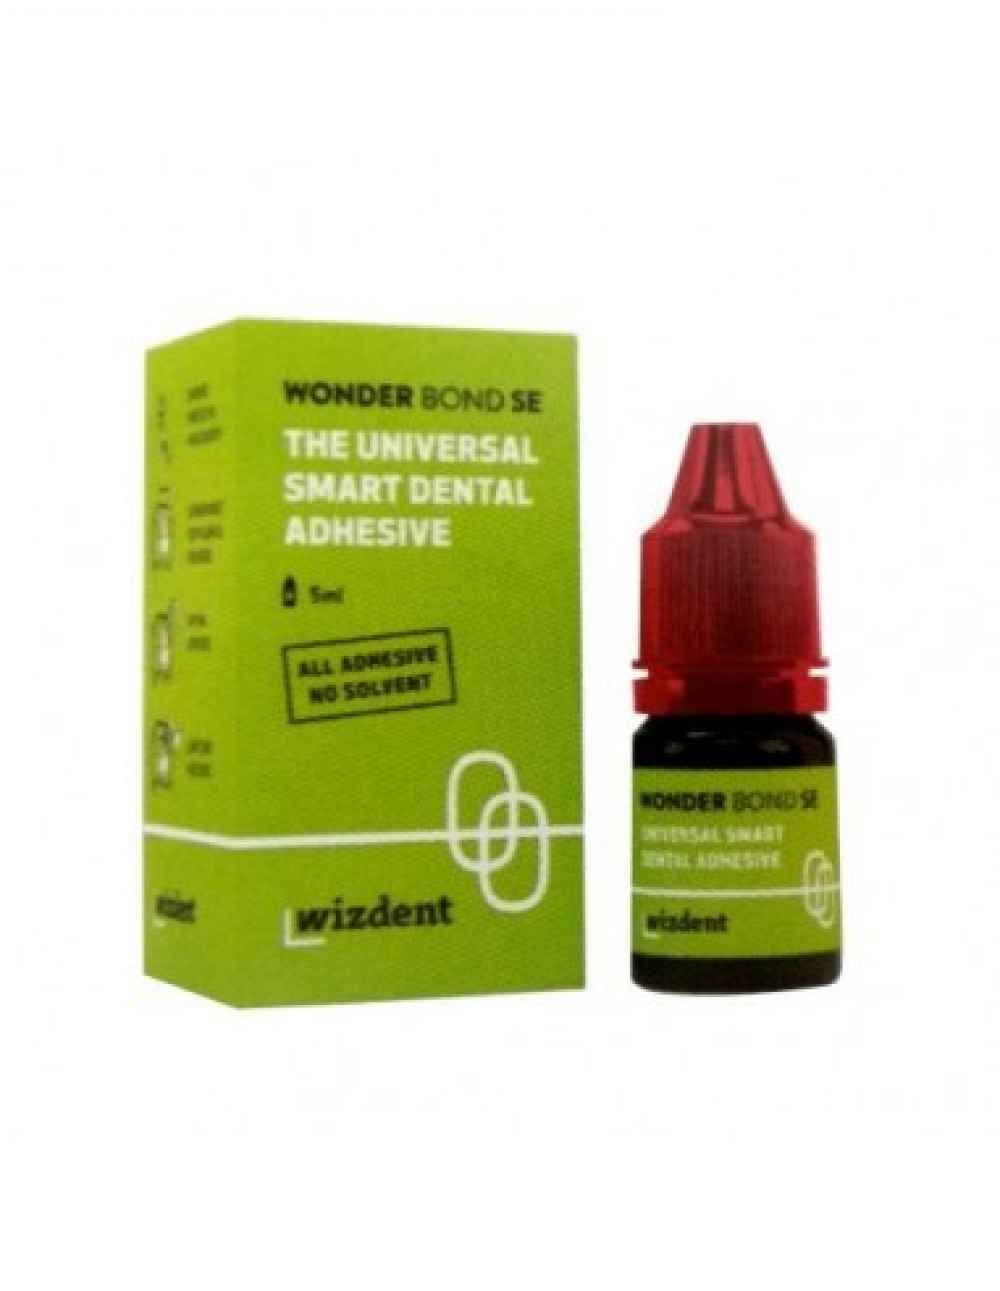 Wizdent Wonder Bond SE The universal smart dental adhesive 5ML